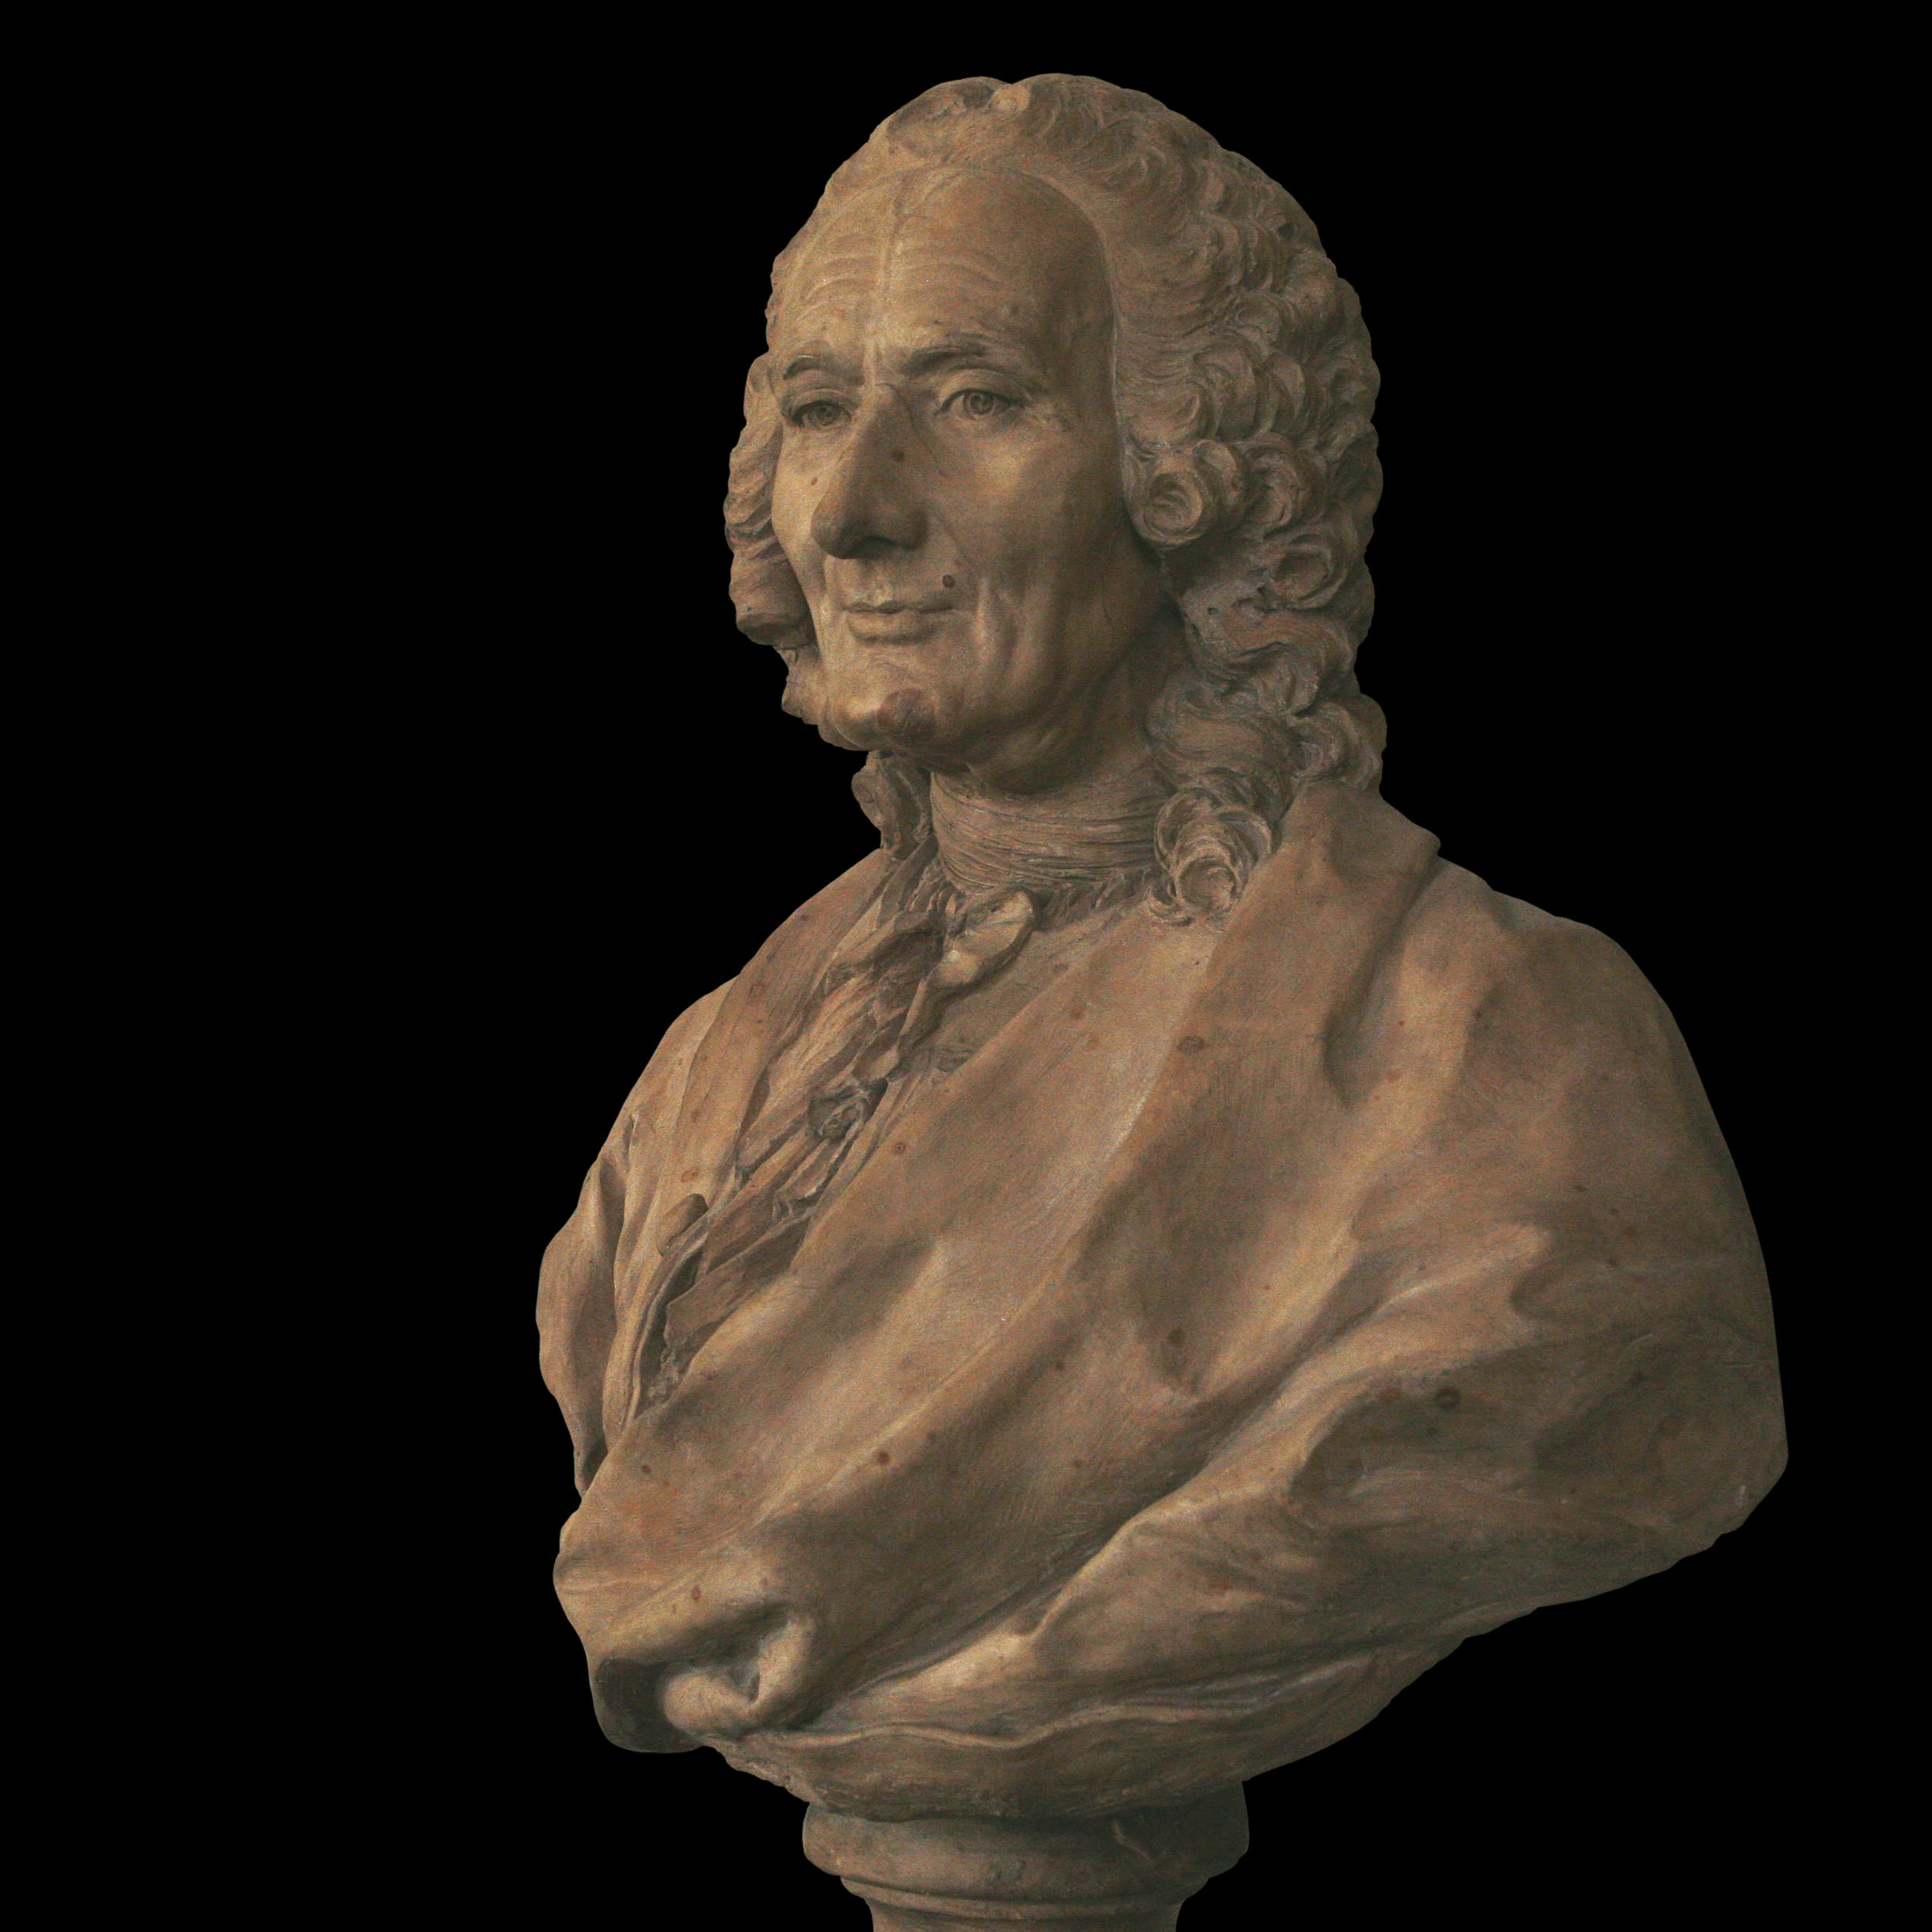 Jean-Philippe Rameau by Jean-Jacques Caffieri - 20080203-01